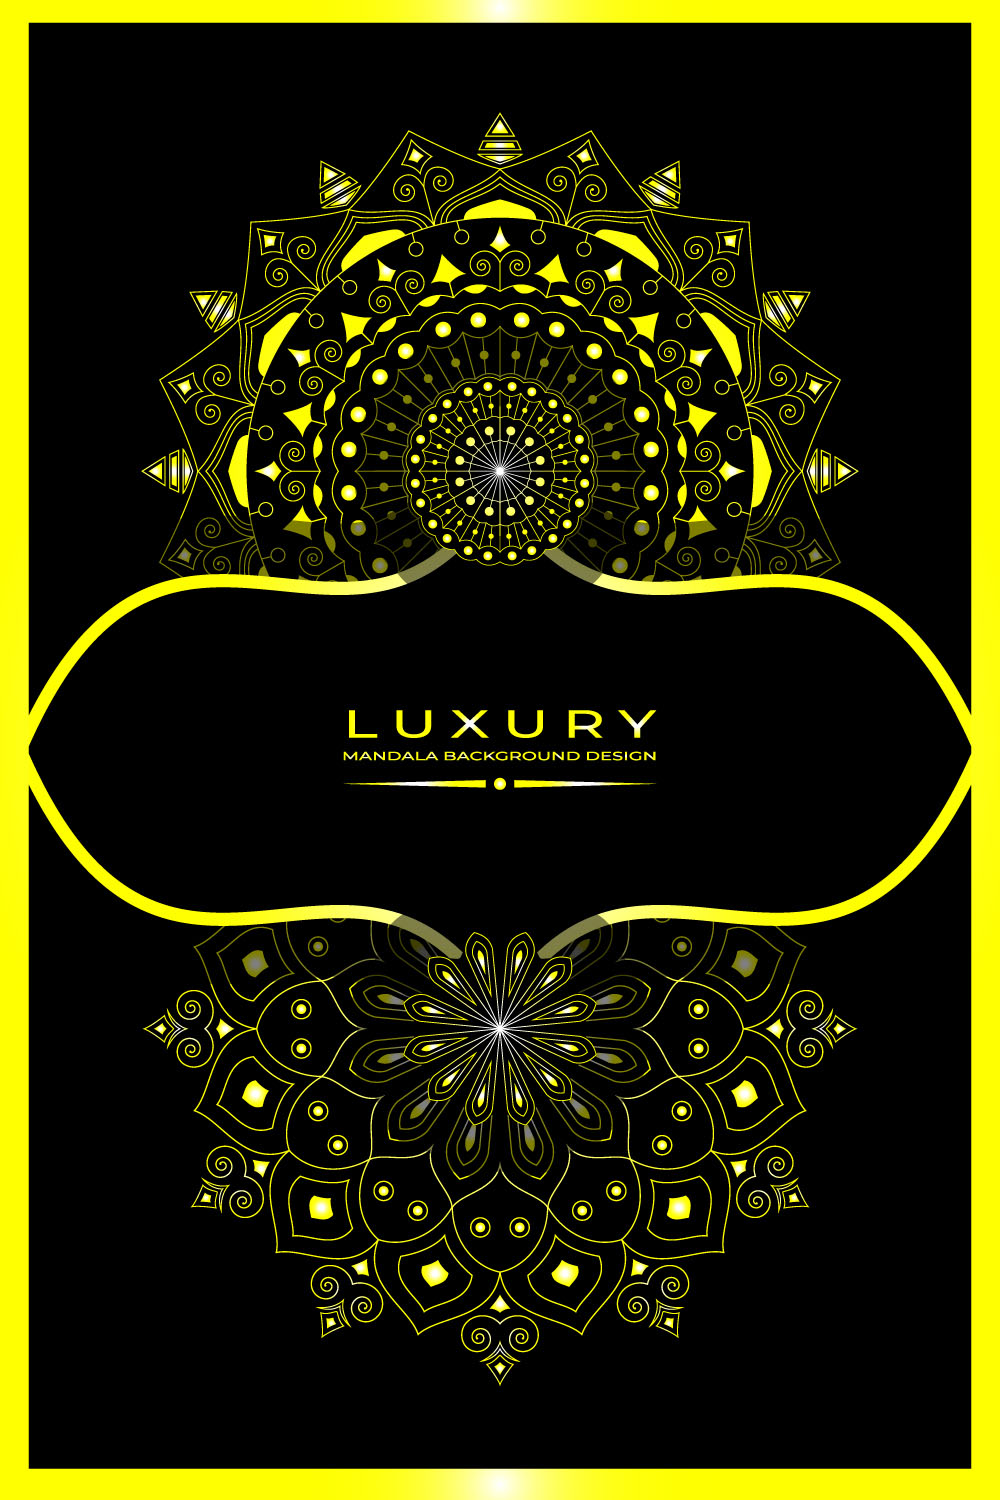 02 Luxury Mandala Background Design pinterest preview image.